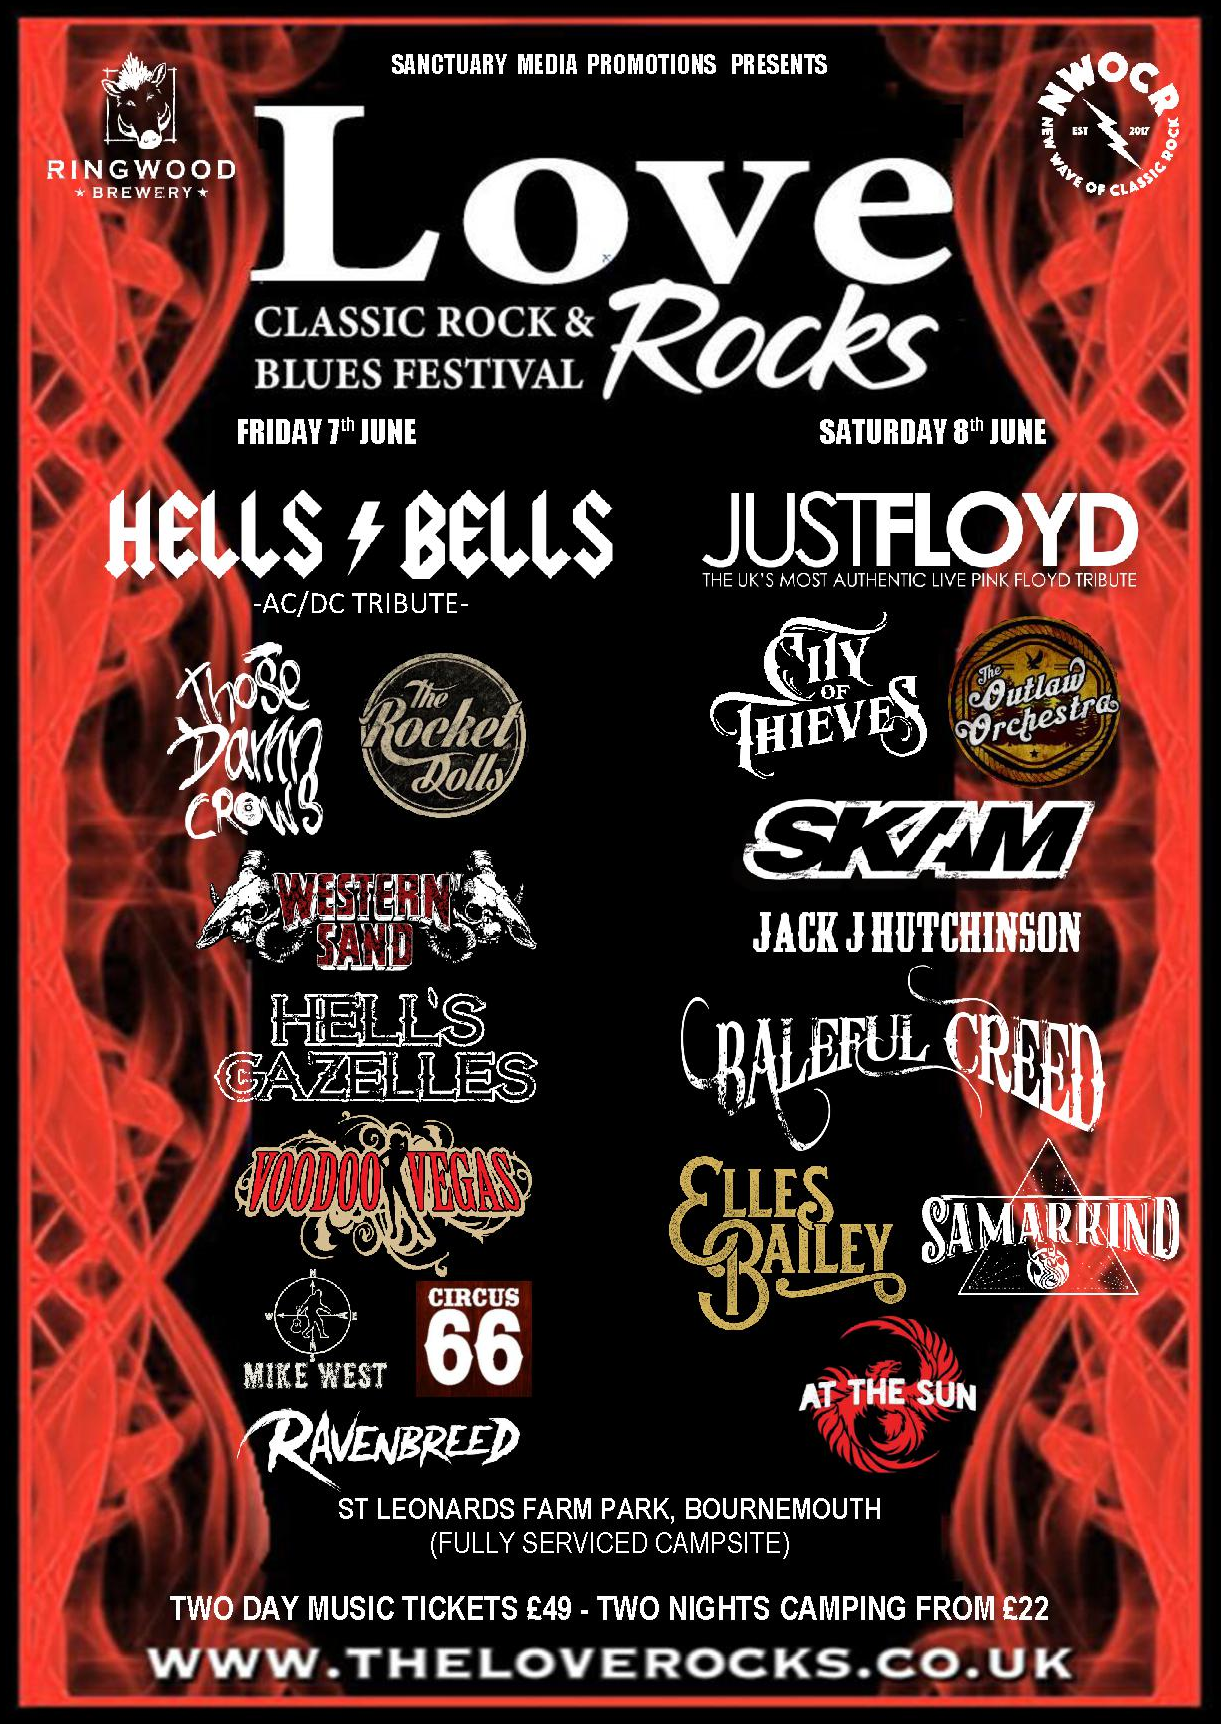 Loverocks 2019 Classic Rock Festival, Bournemouth, Dorset